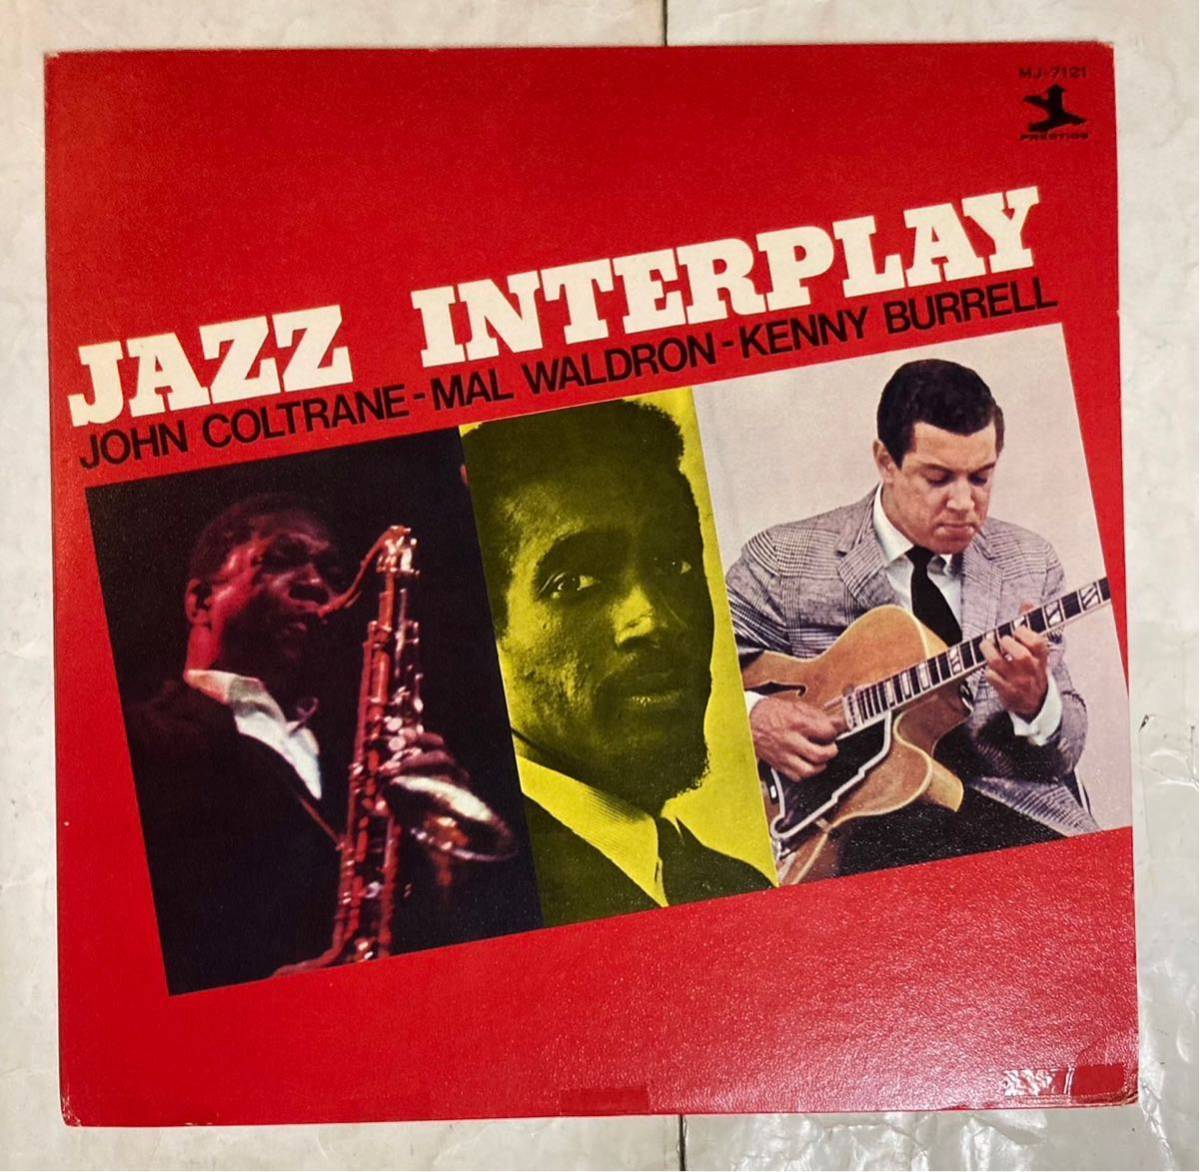 LP 国内盤 MONO John Coltrane - Mal Waldron - Kenny Burrell Jazz Interplay MJ-7121_画像1